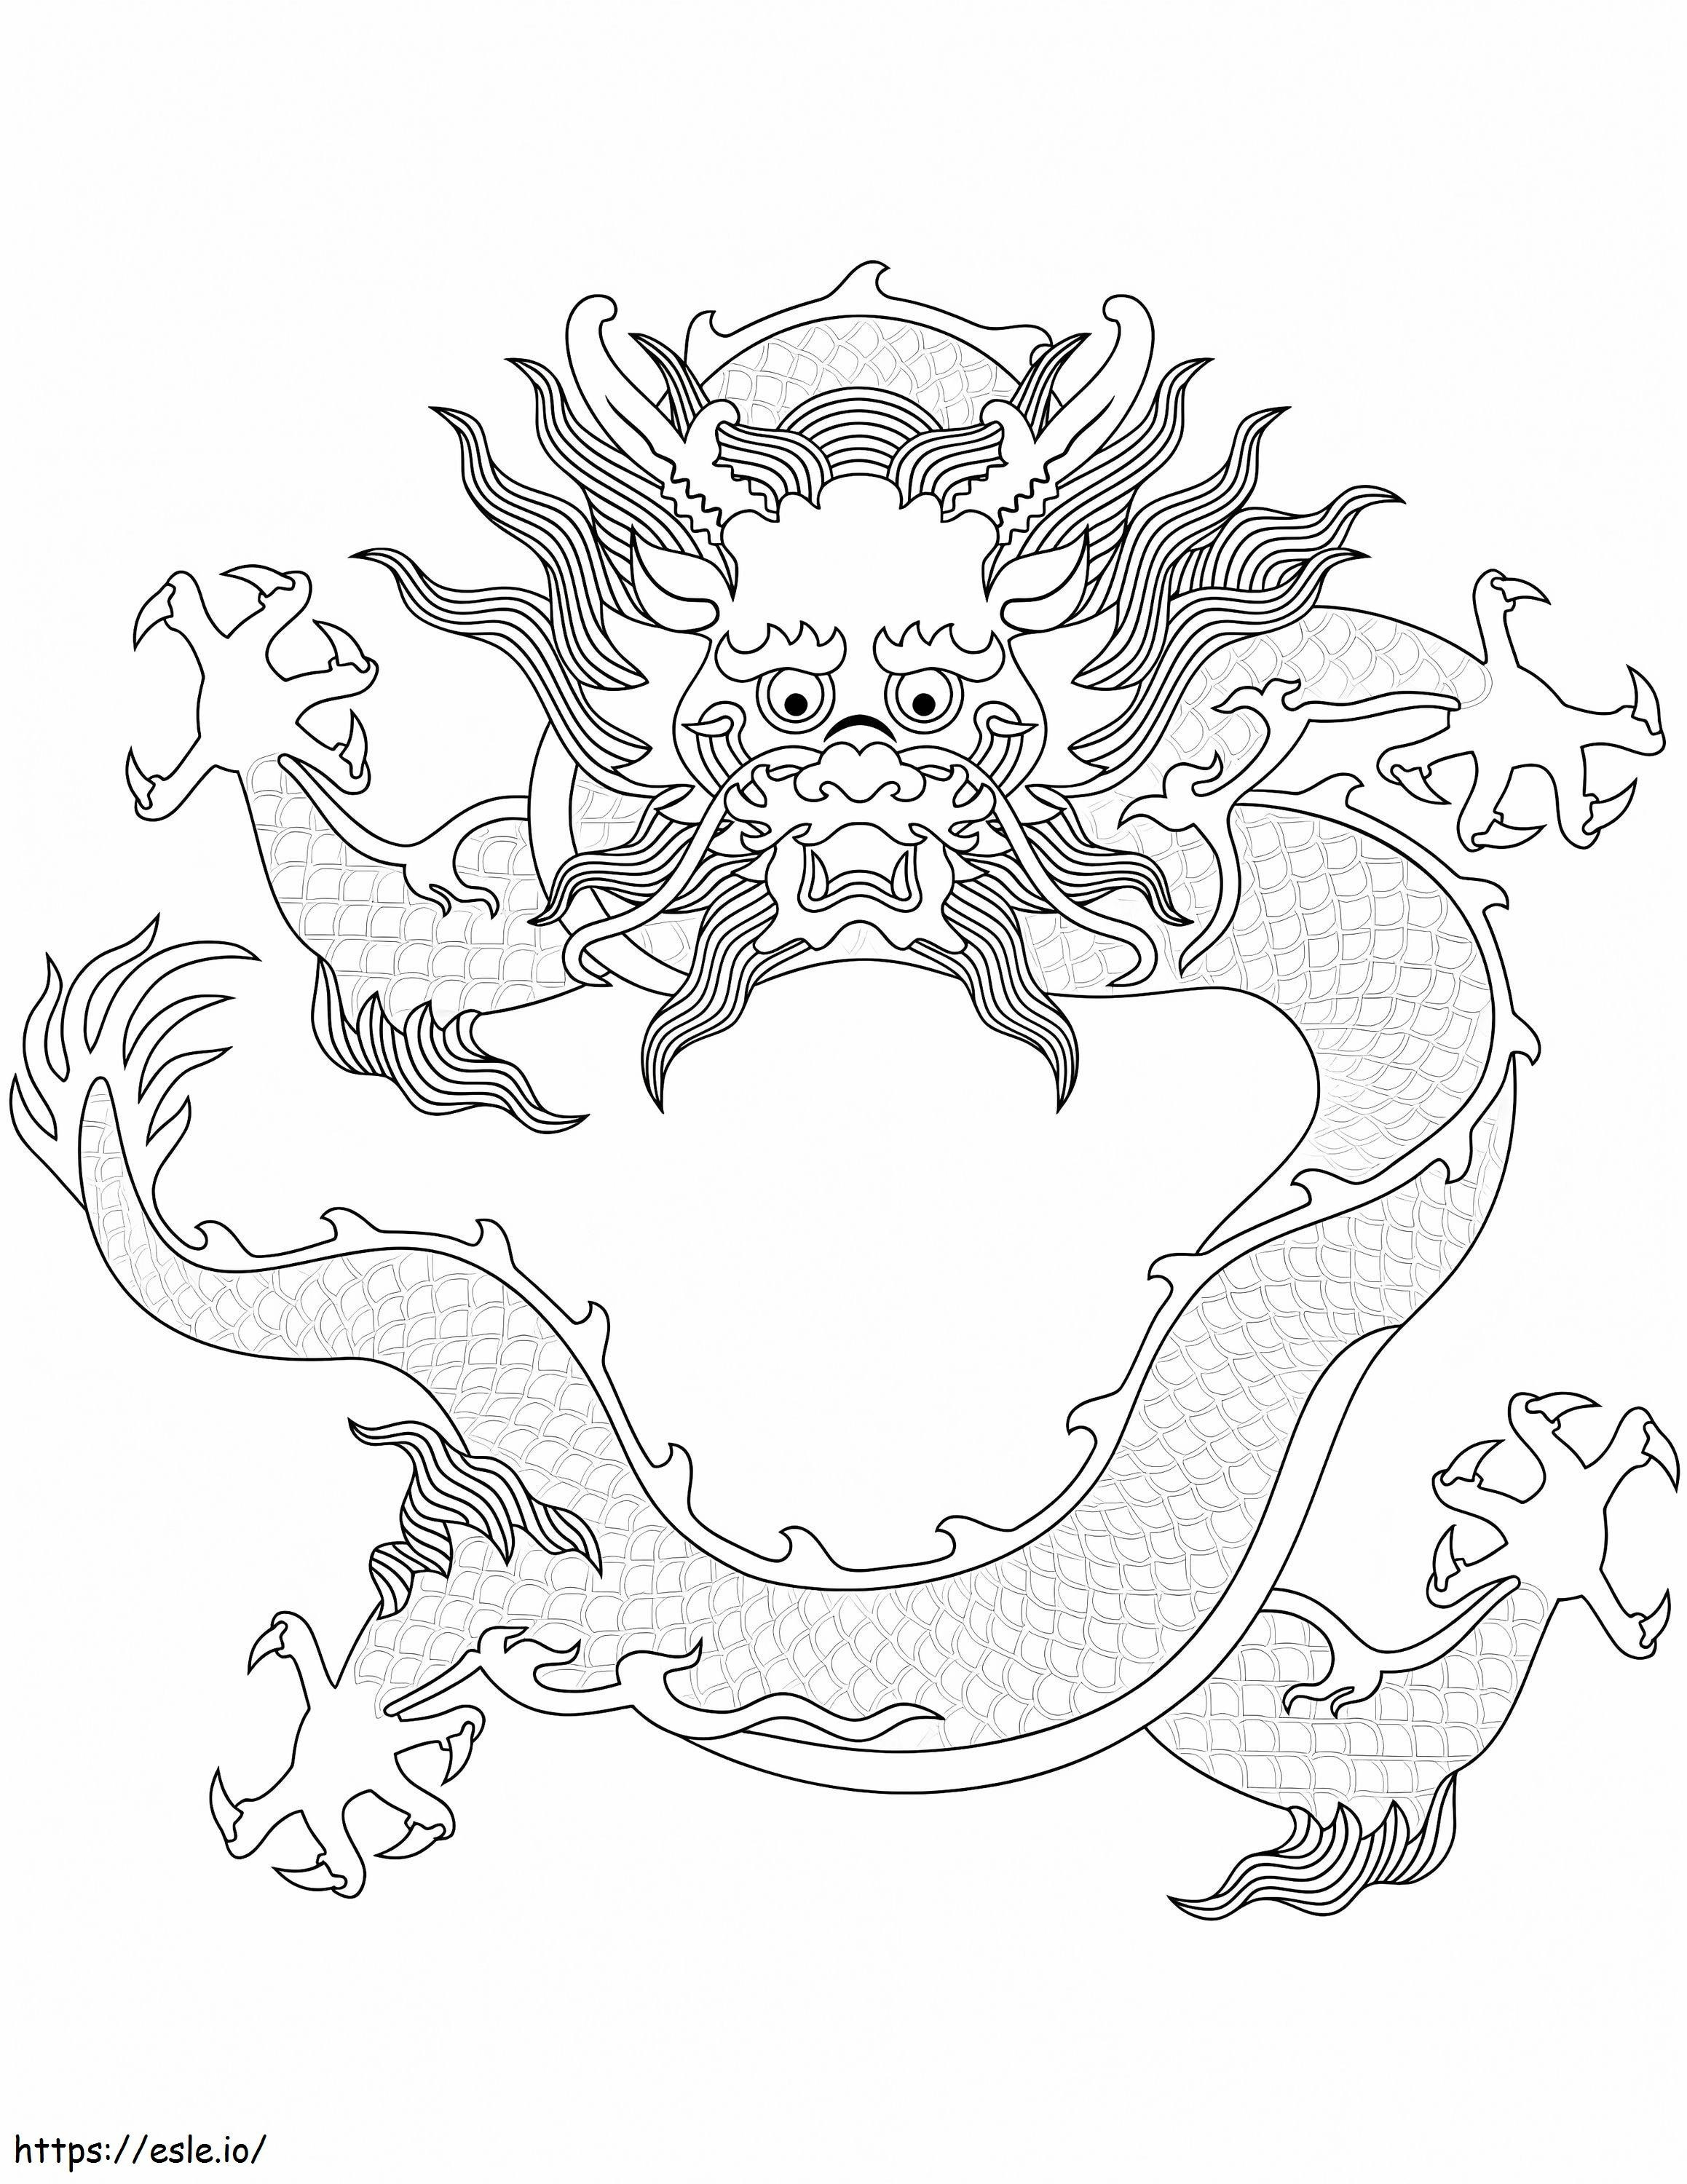 Dragão chinês para colorir